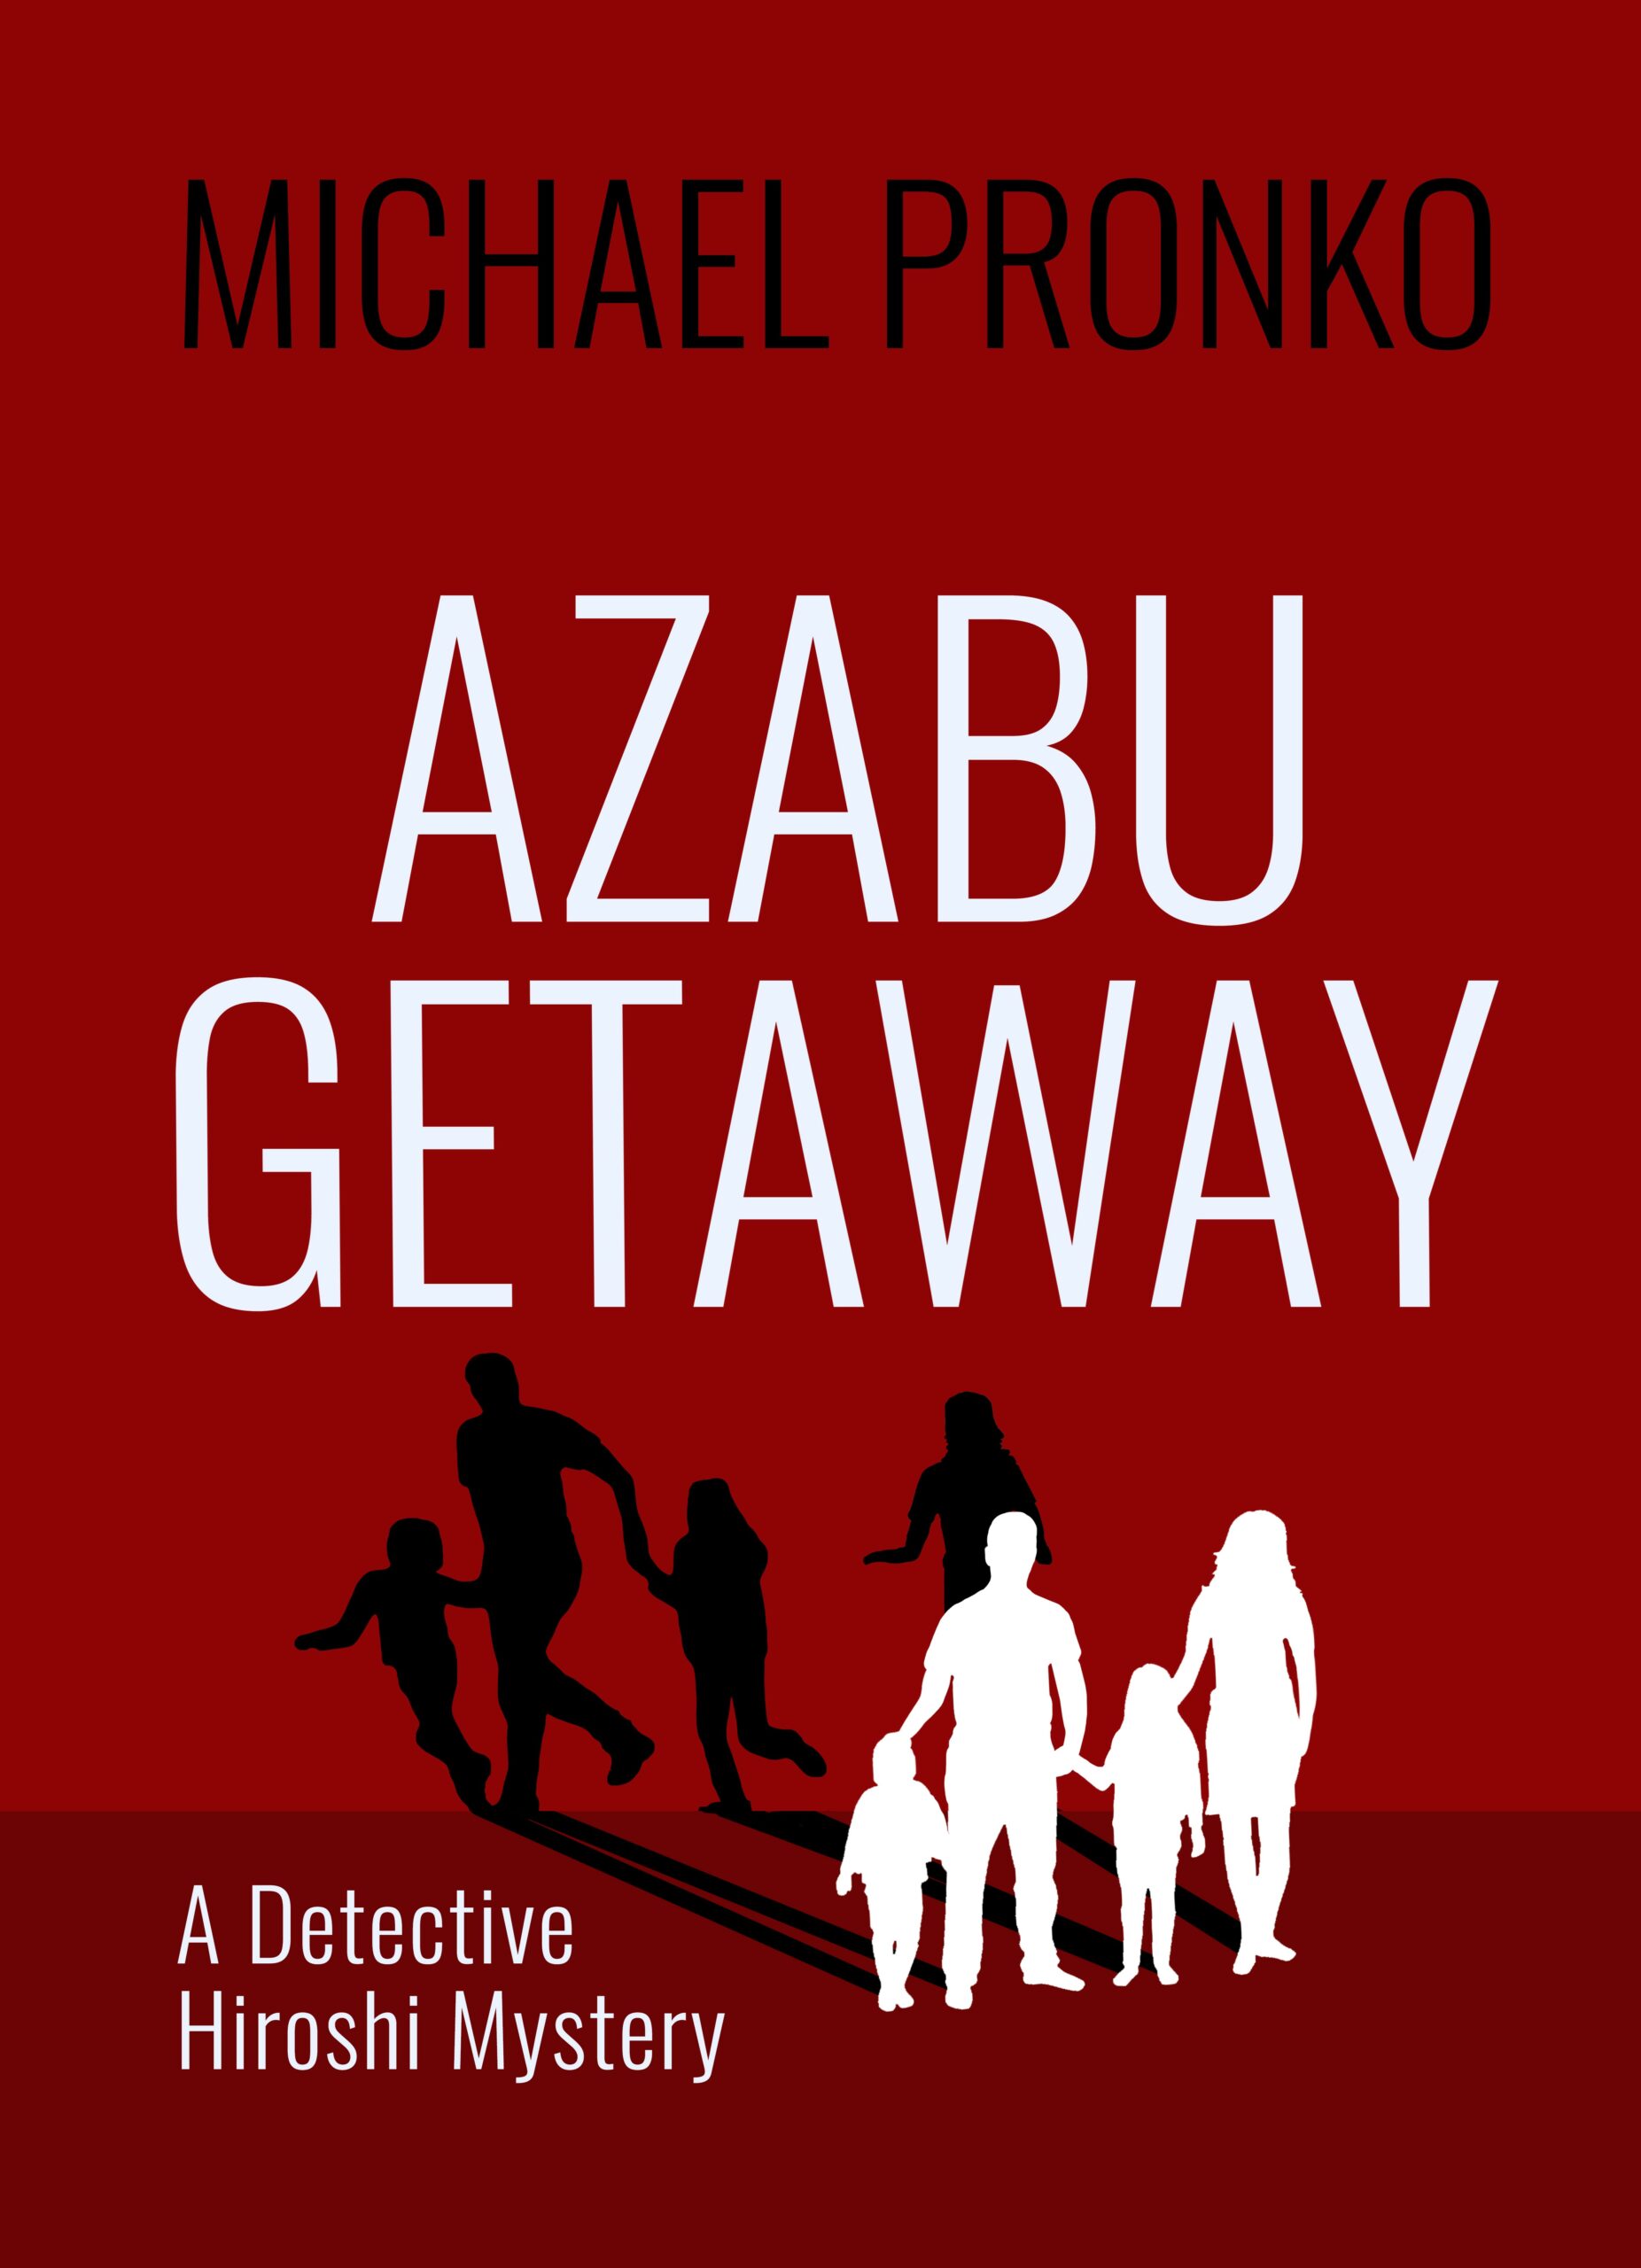 Azabu Getaway by Michael Pronko